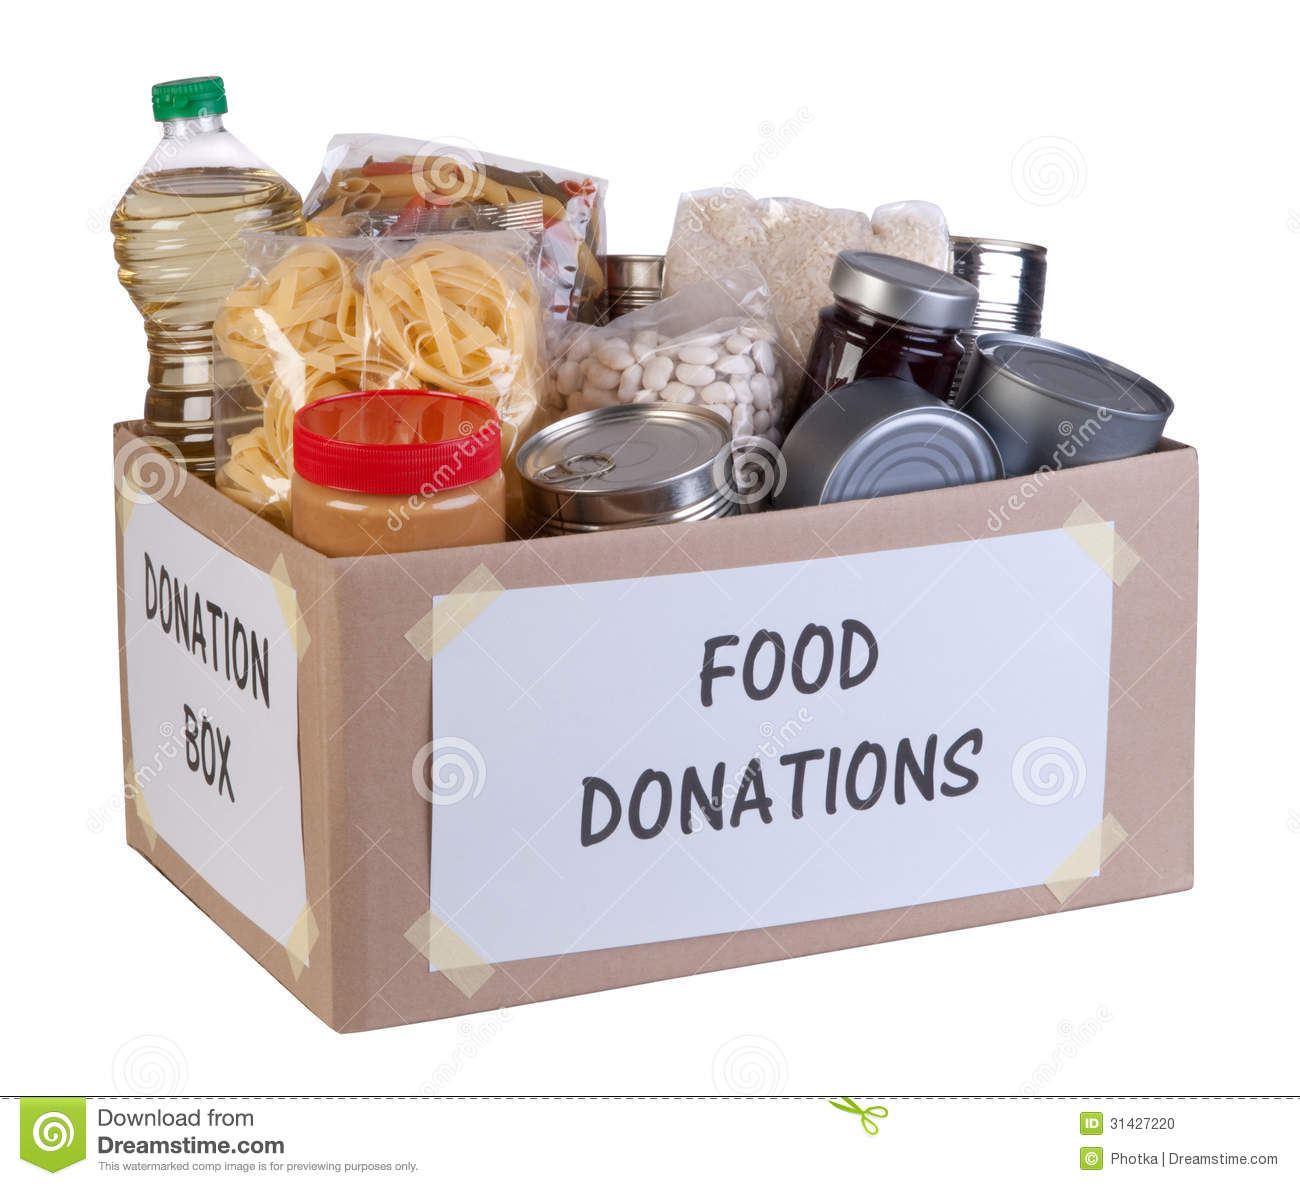 Food Donations Box Stock Photo   Image  31427220